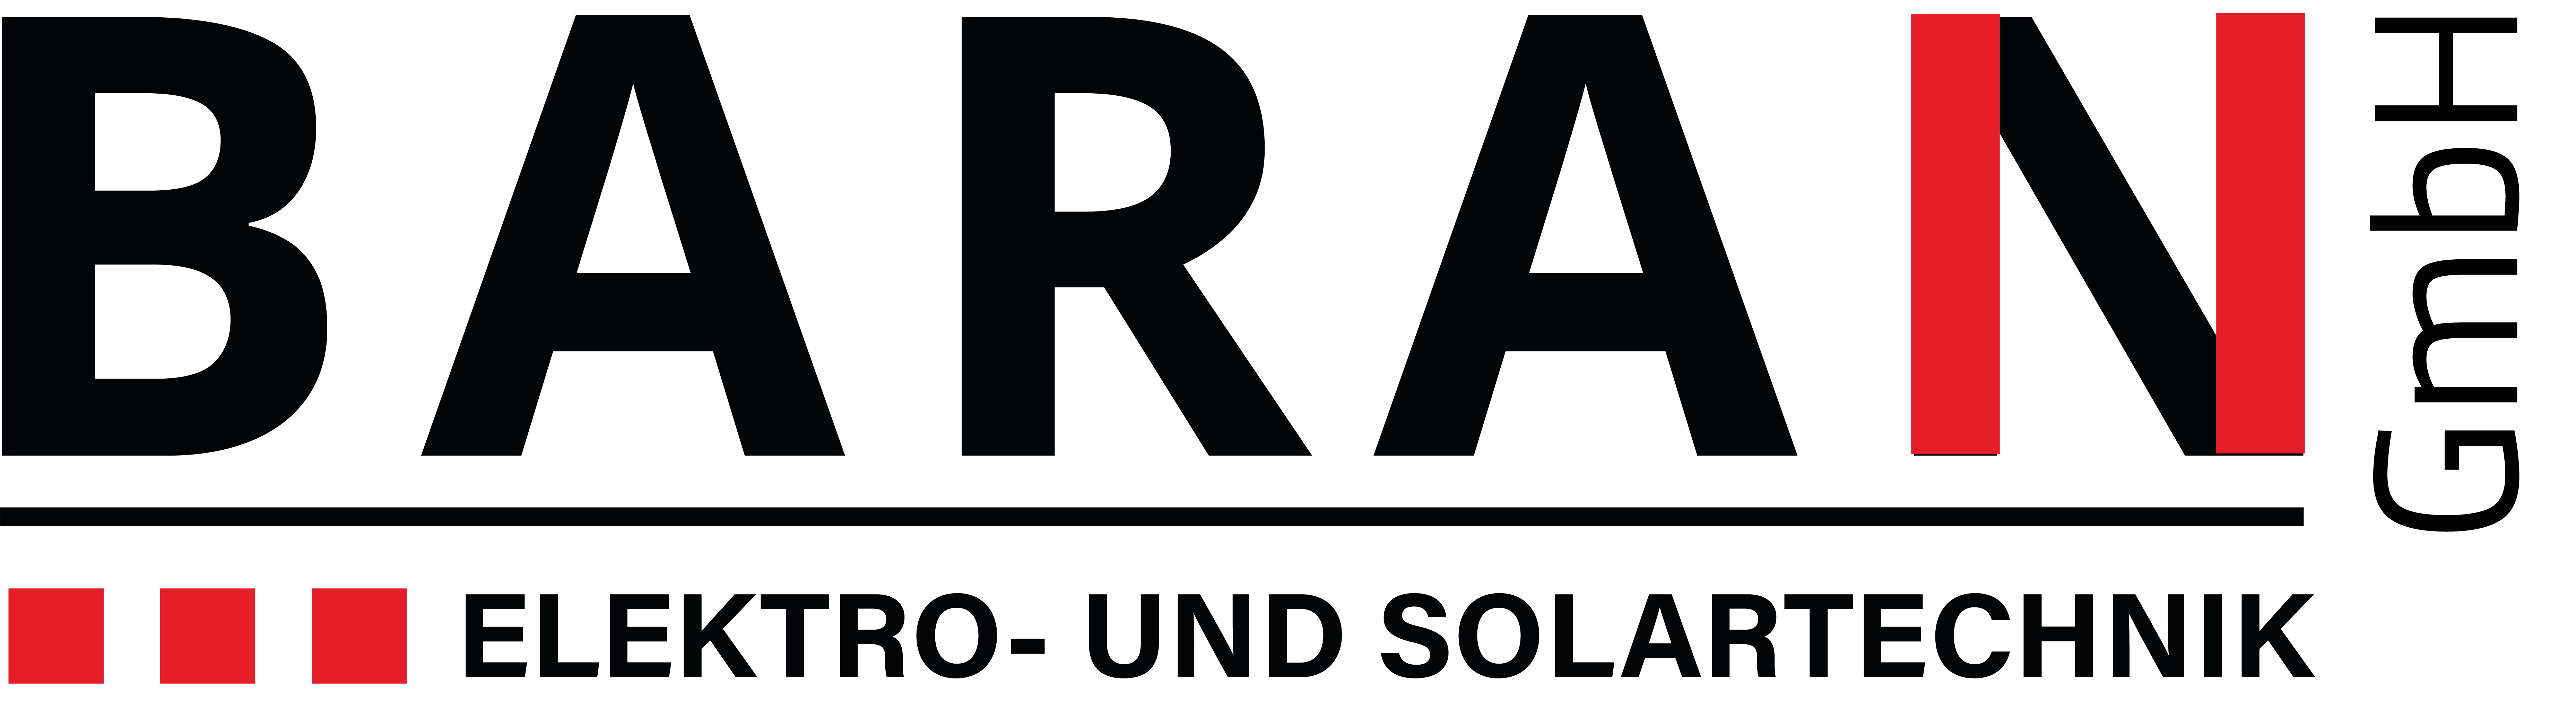 BARAN Elektro- und Solartechnik GmbH